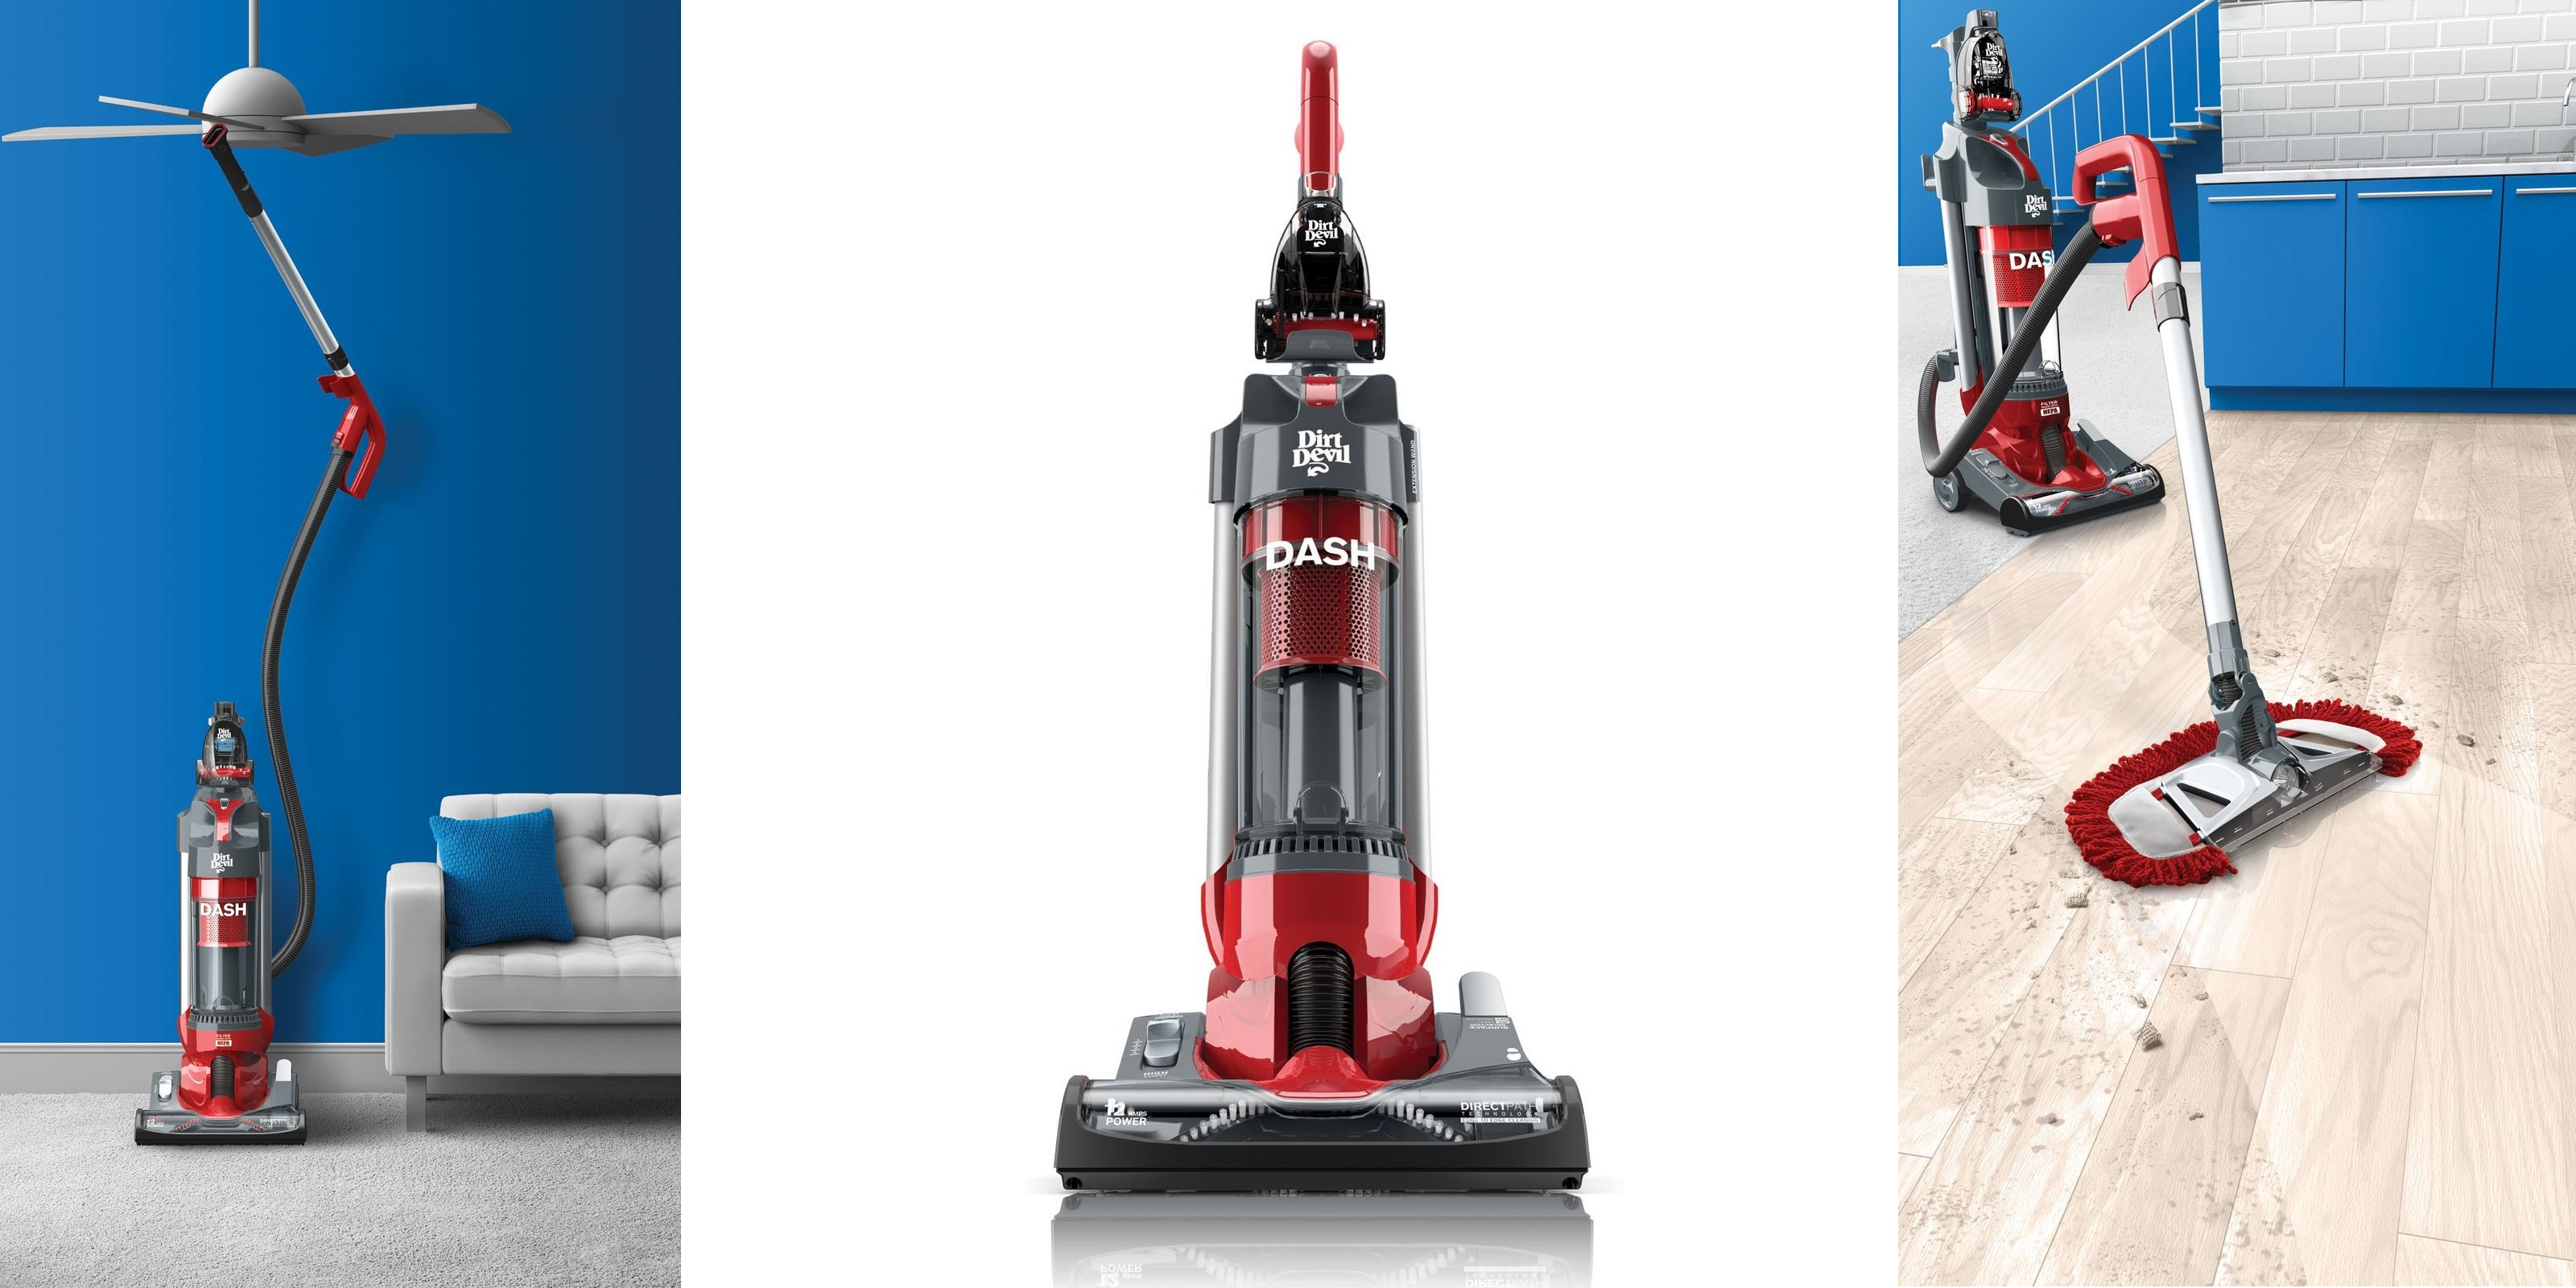 Dirt Devil Dash Upright Vacuum Cleaner with Vac+Dust Floor Tool—$69.99!